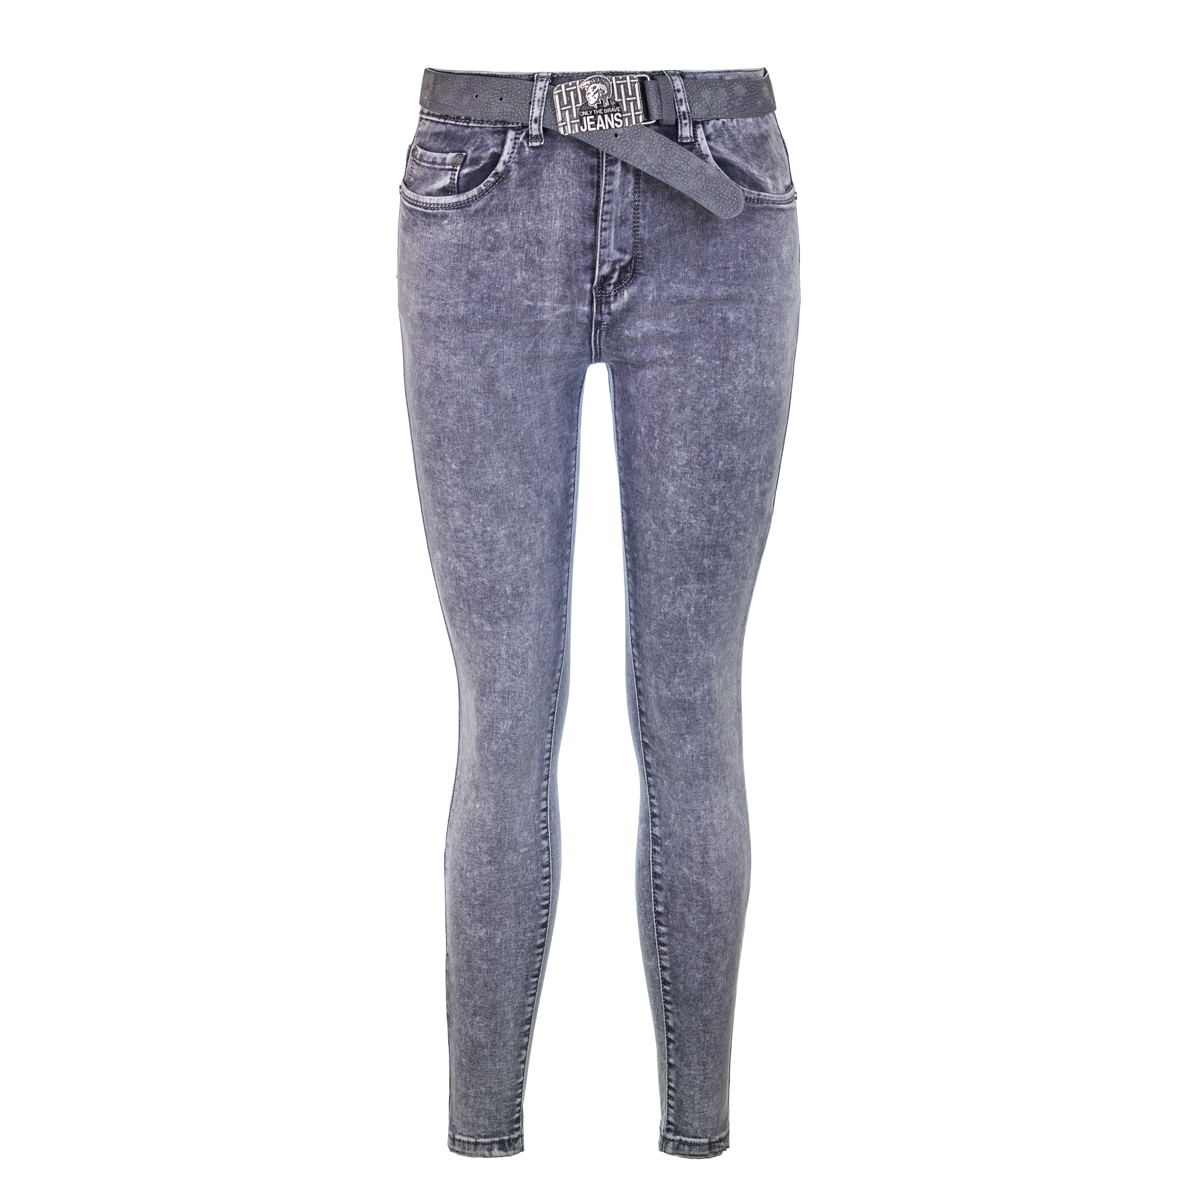 Жен. джинсы арт. 12-0087 Серый р. 30 -, размер 30 - фото 1